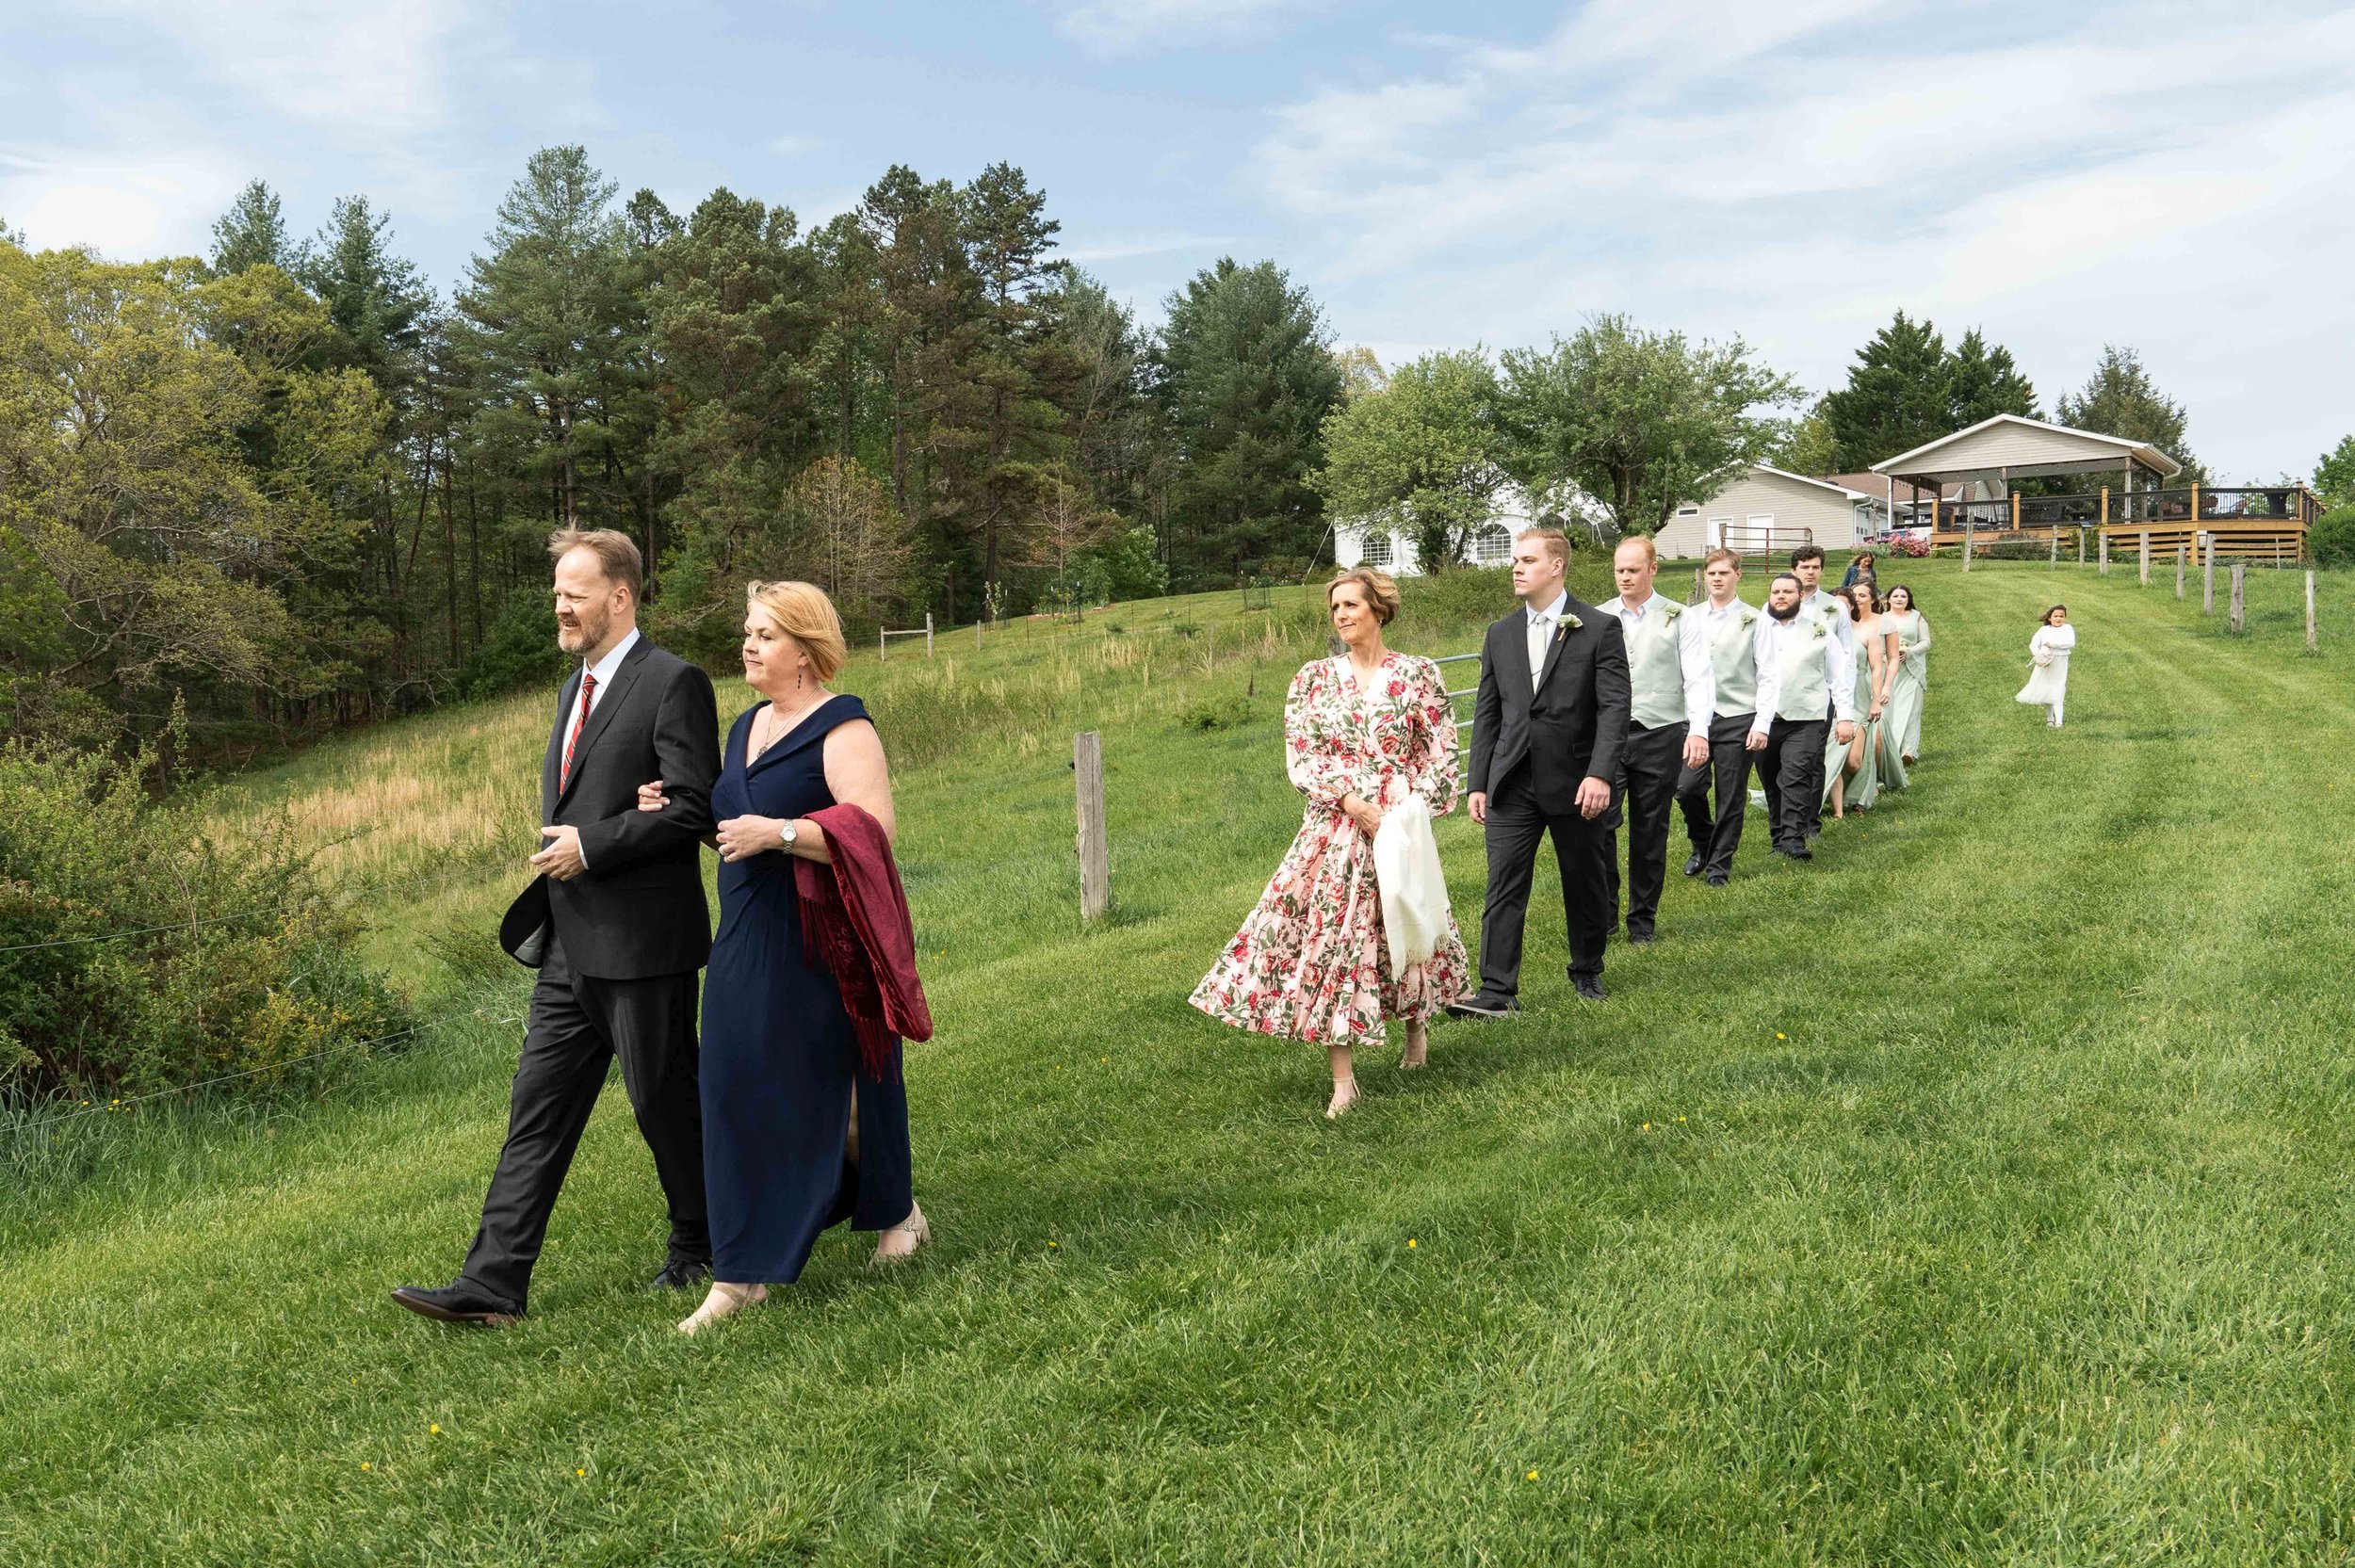 Outdoor April Wedding in Asheville North Carolina at Emerald Ridge Farm & Event Center blog 1 30.jpg